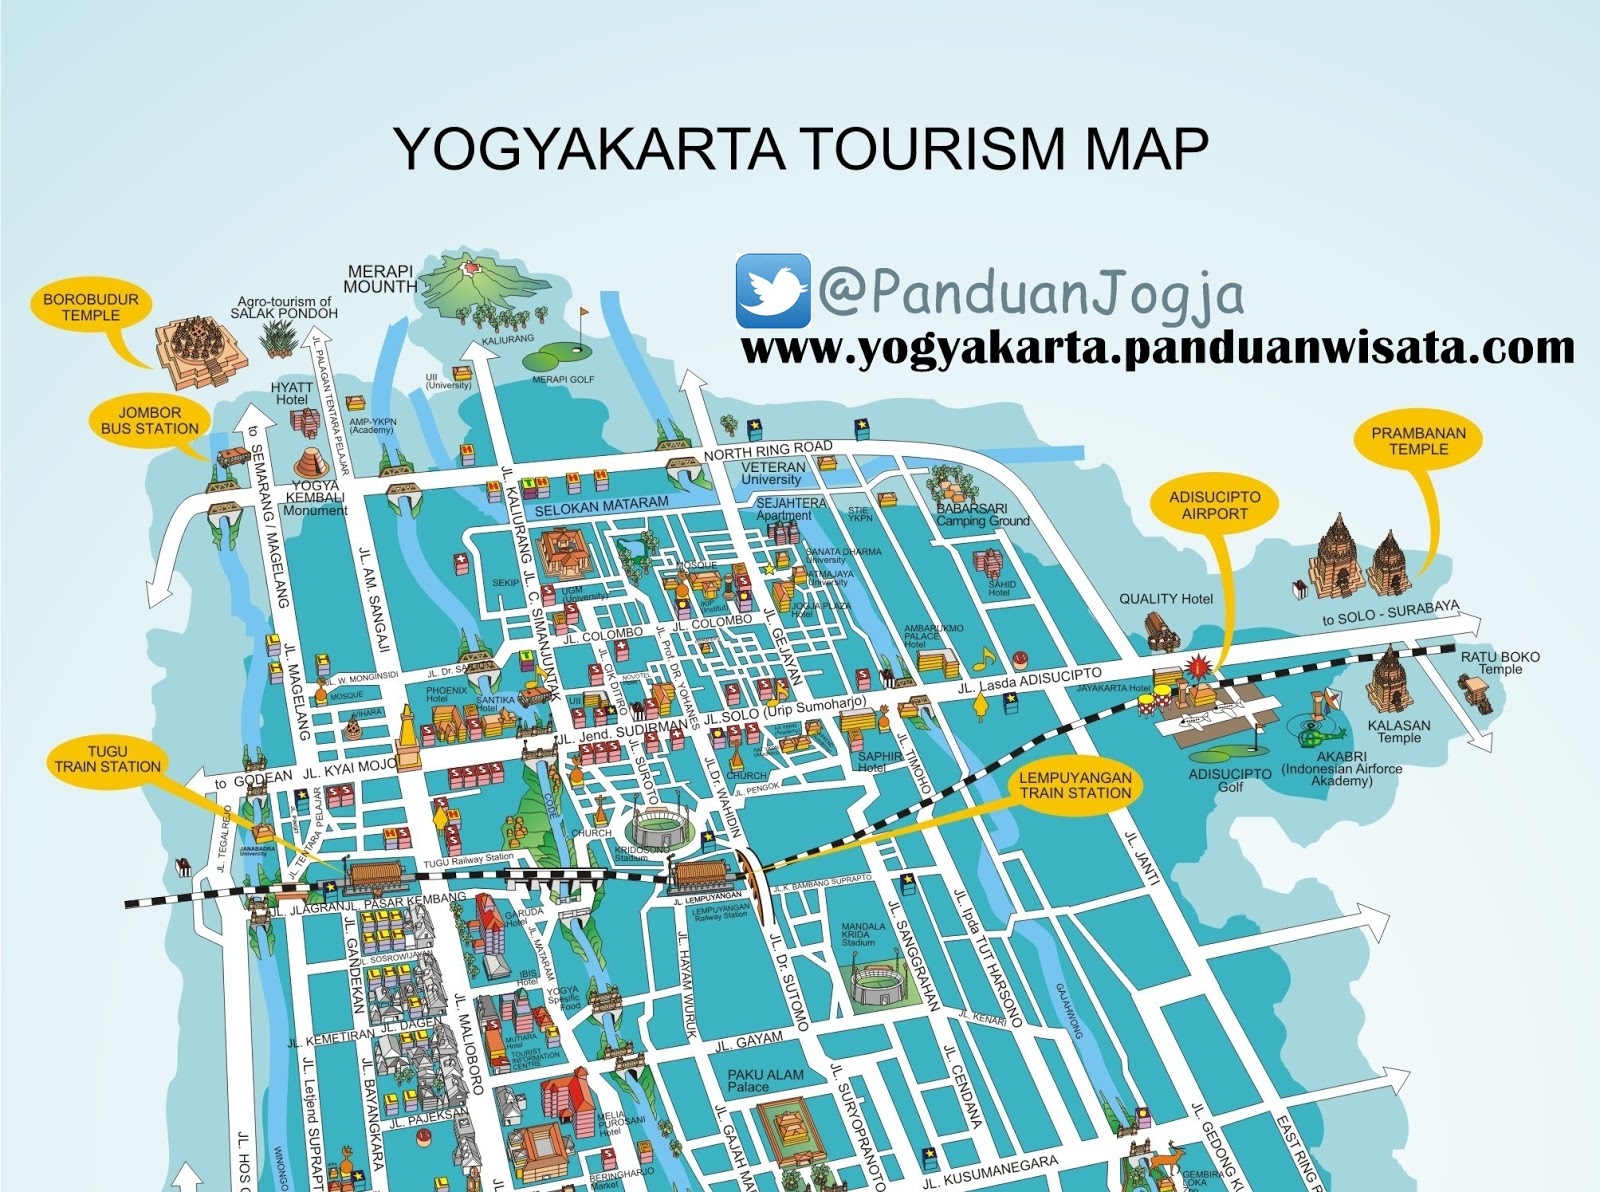 > Peta Lengkap Indonesia: Yogyakarta Tourism Map